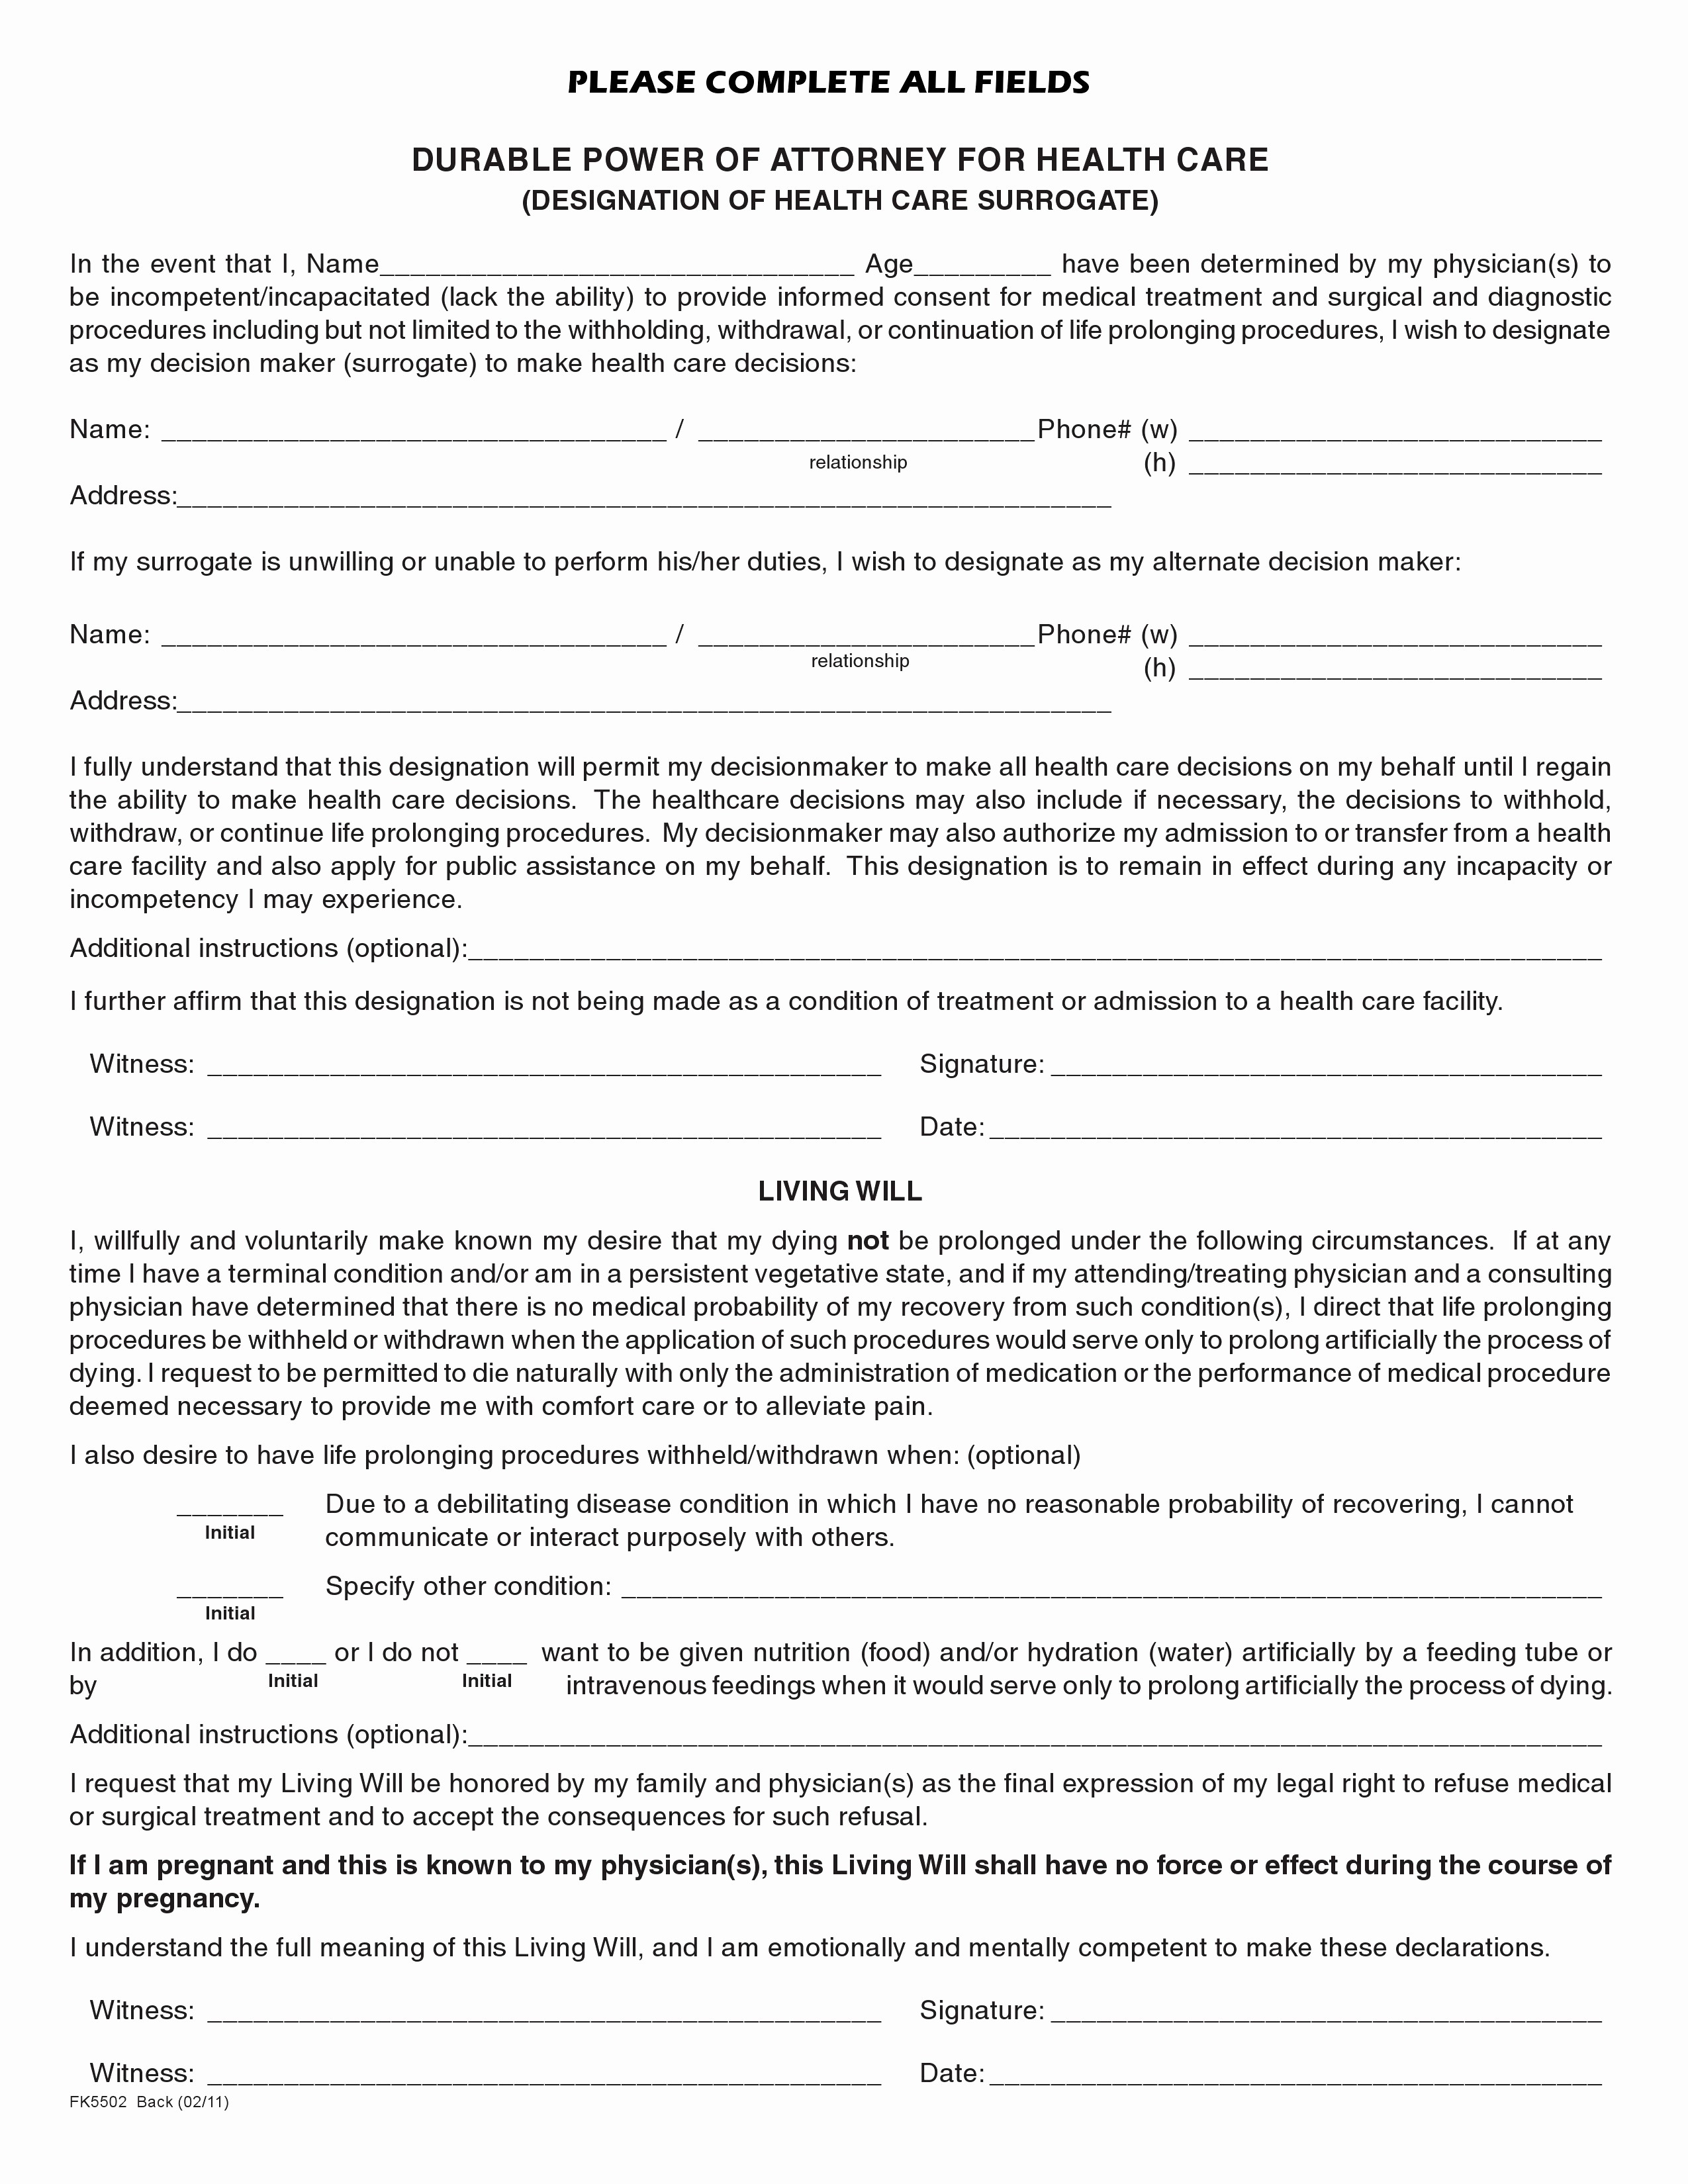 Florida Designation Of Health Care Surrogate Form Free Beautiful Document